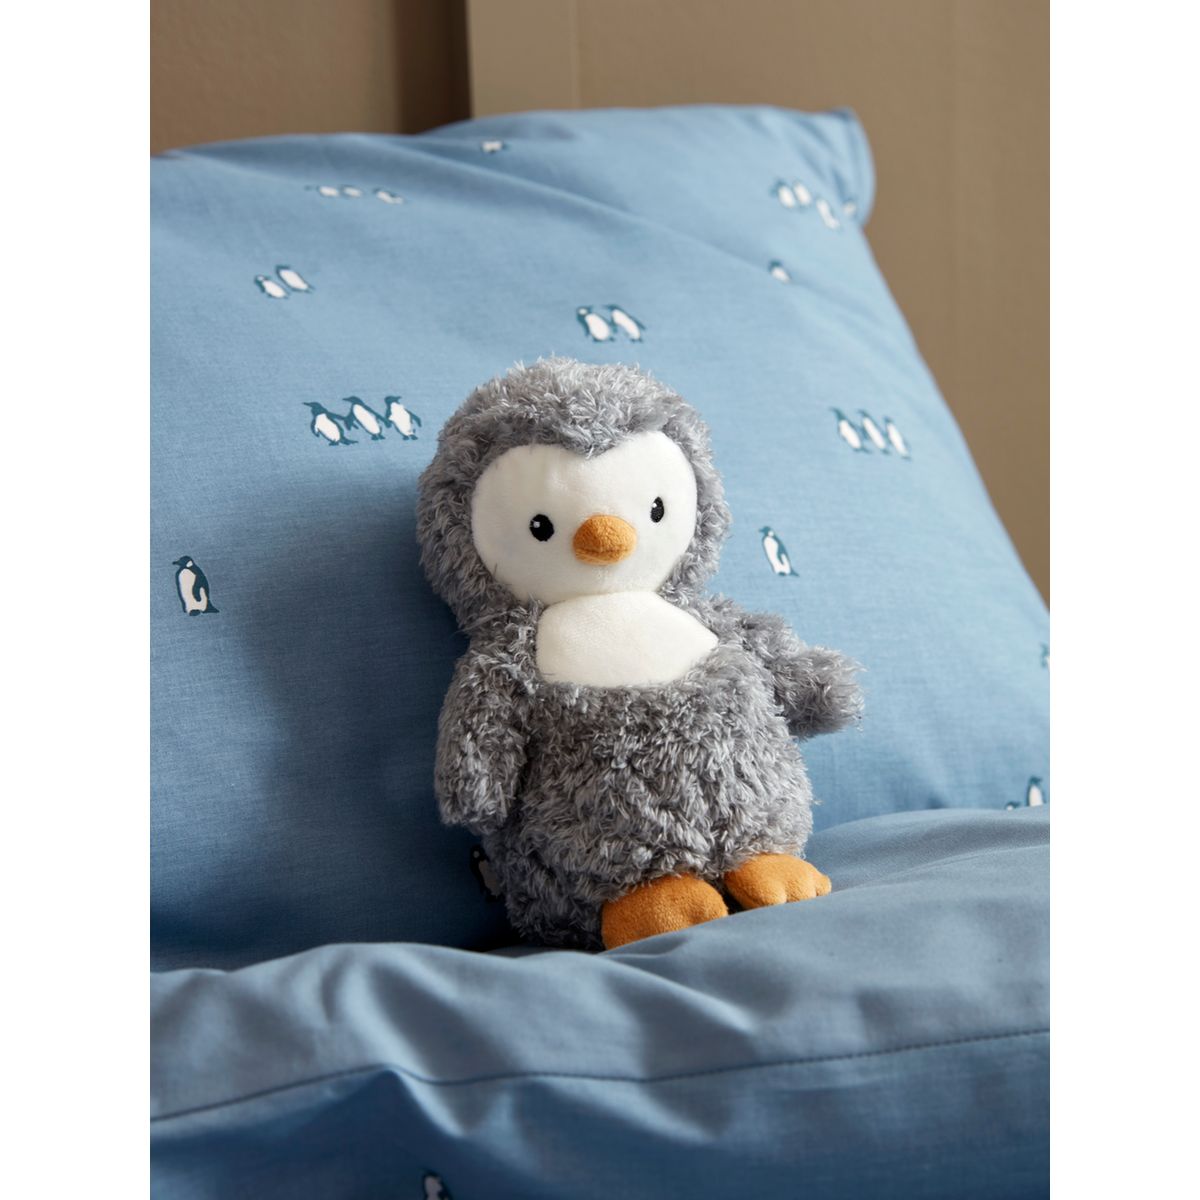 Pingouin en peluche grande taille - Peluche - Achat & prix